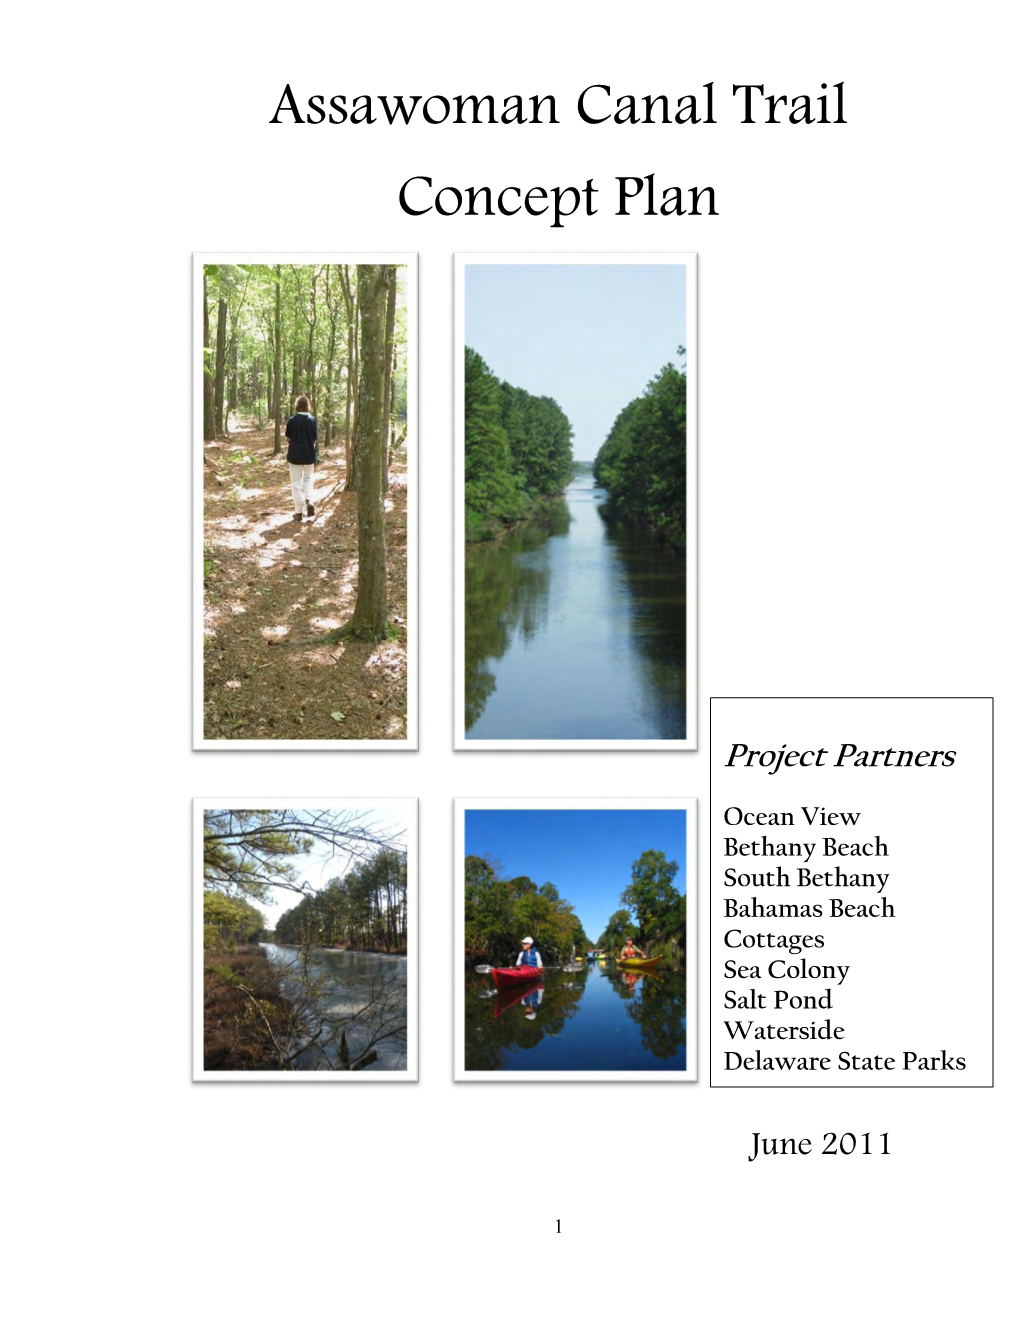 Assawoman Canal Trail Concept Plan